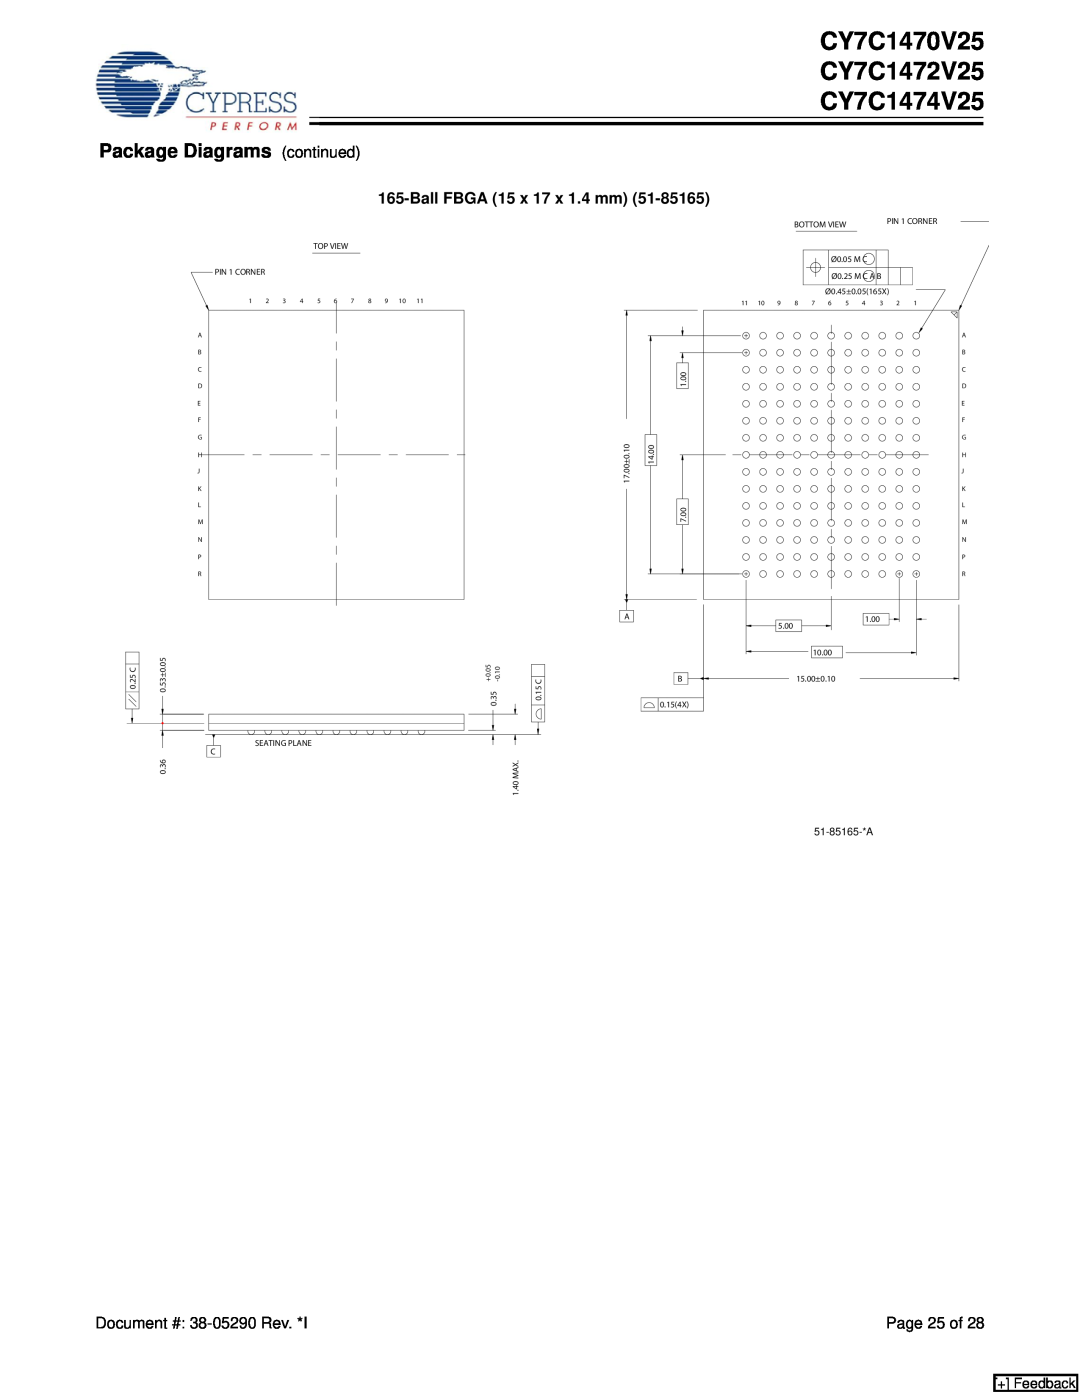 Cypress manual CY7C1470V25 CY7C1472V25 CY7C1474V25, Package Diagrams, Ball FBGA 15 x 17 x 1.4 mm, Page 25 of, + Feedback 